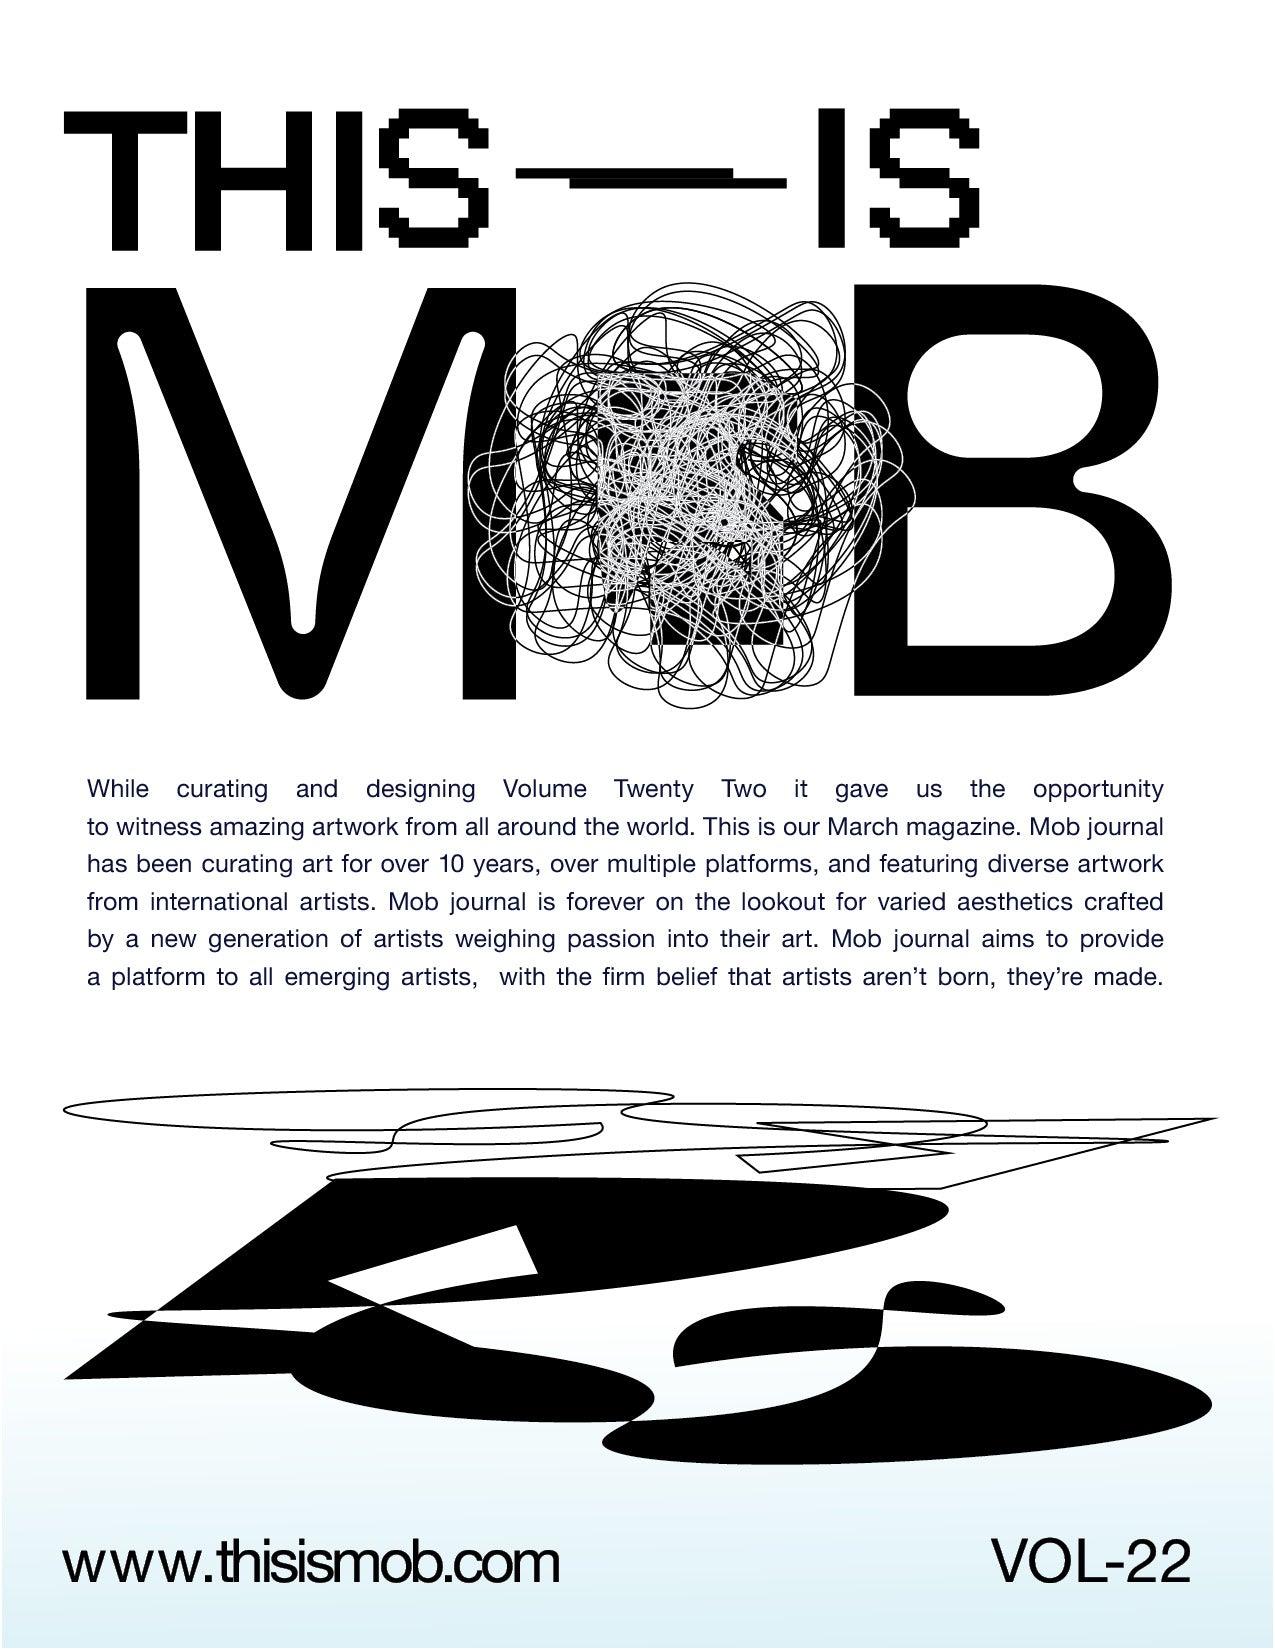 MOB JOURNAL | VOLUME TWENTY TWO | ISSUE #25 - Mob Journal